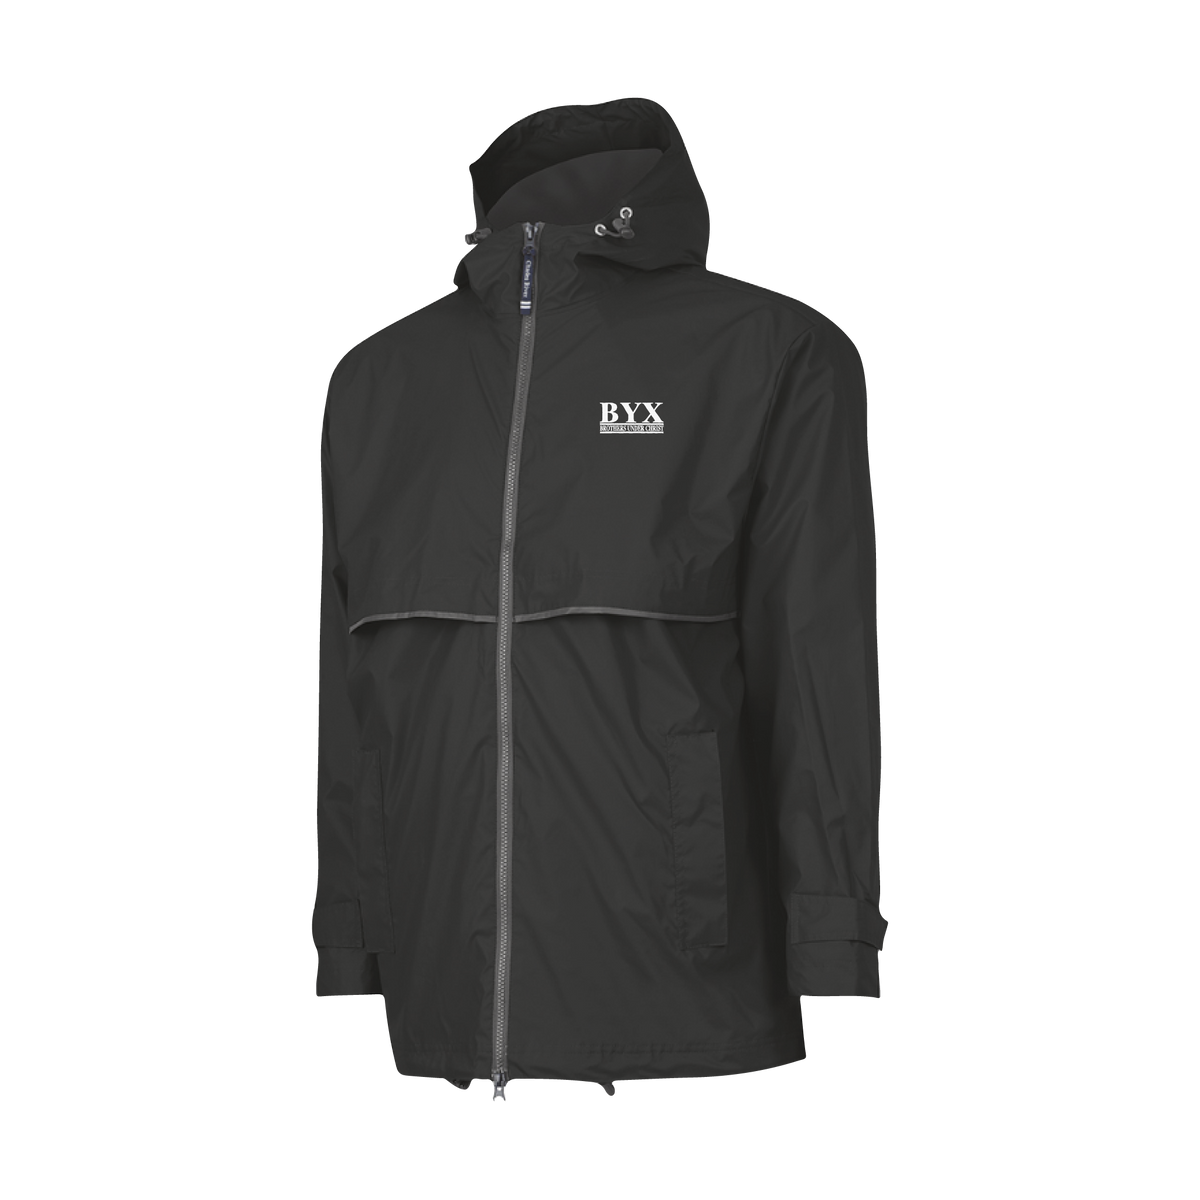 B-Unlimited Greek - Rain Jacket (BYX) - Charles River - 9199 - New Englander Rain Jacket - Black